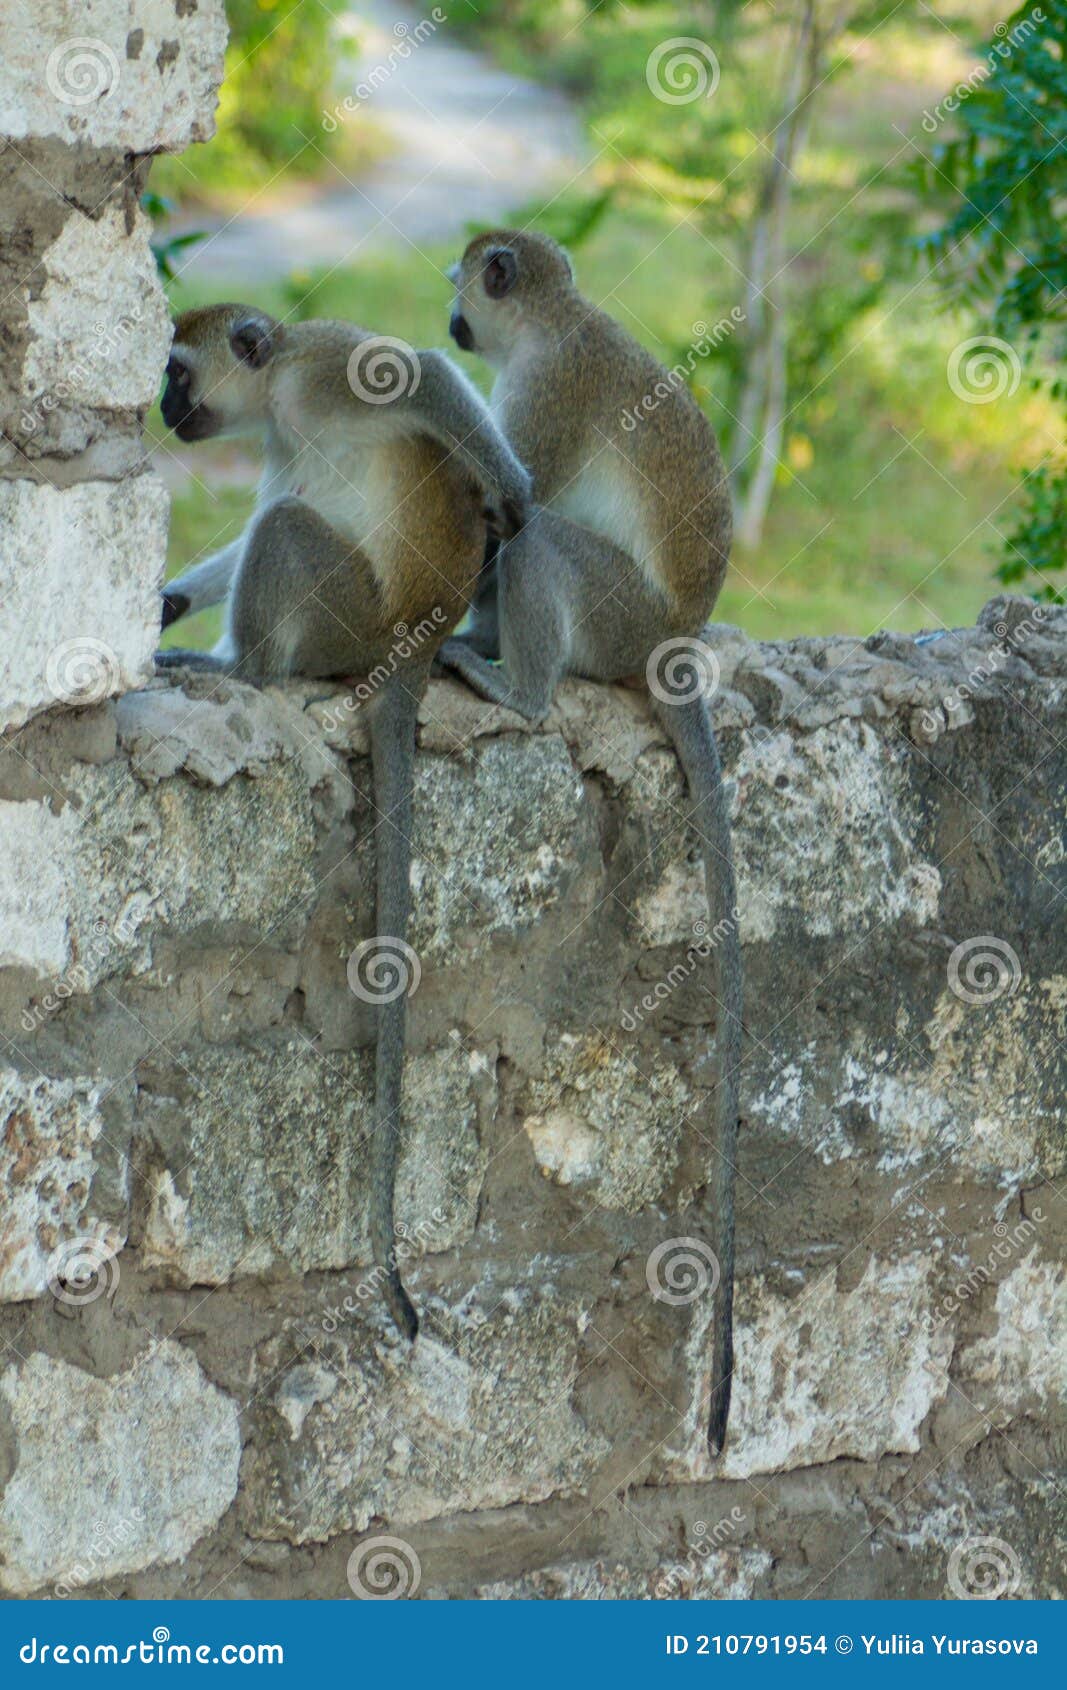 wild monkey climbing the walls